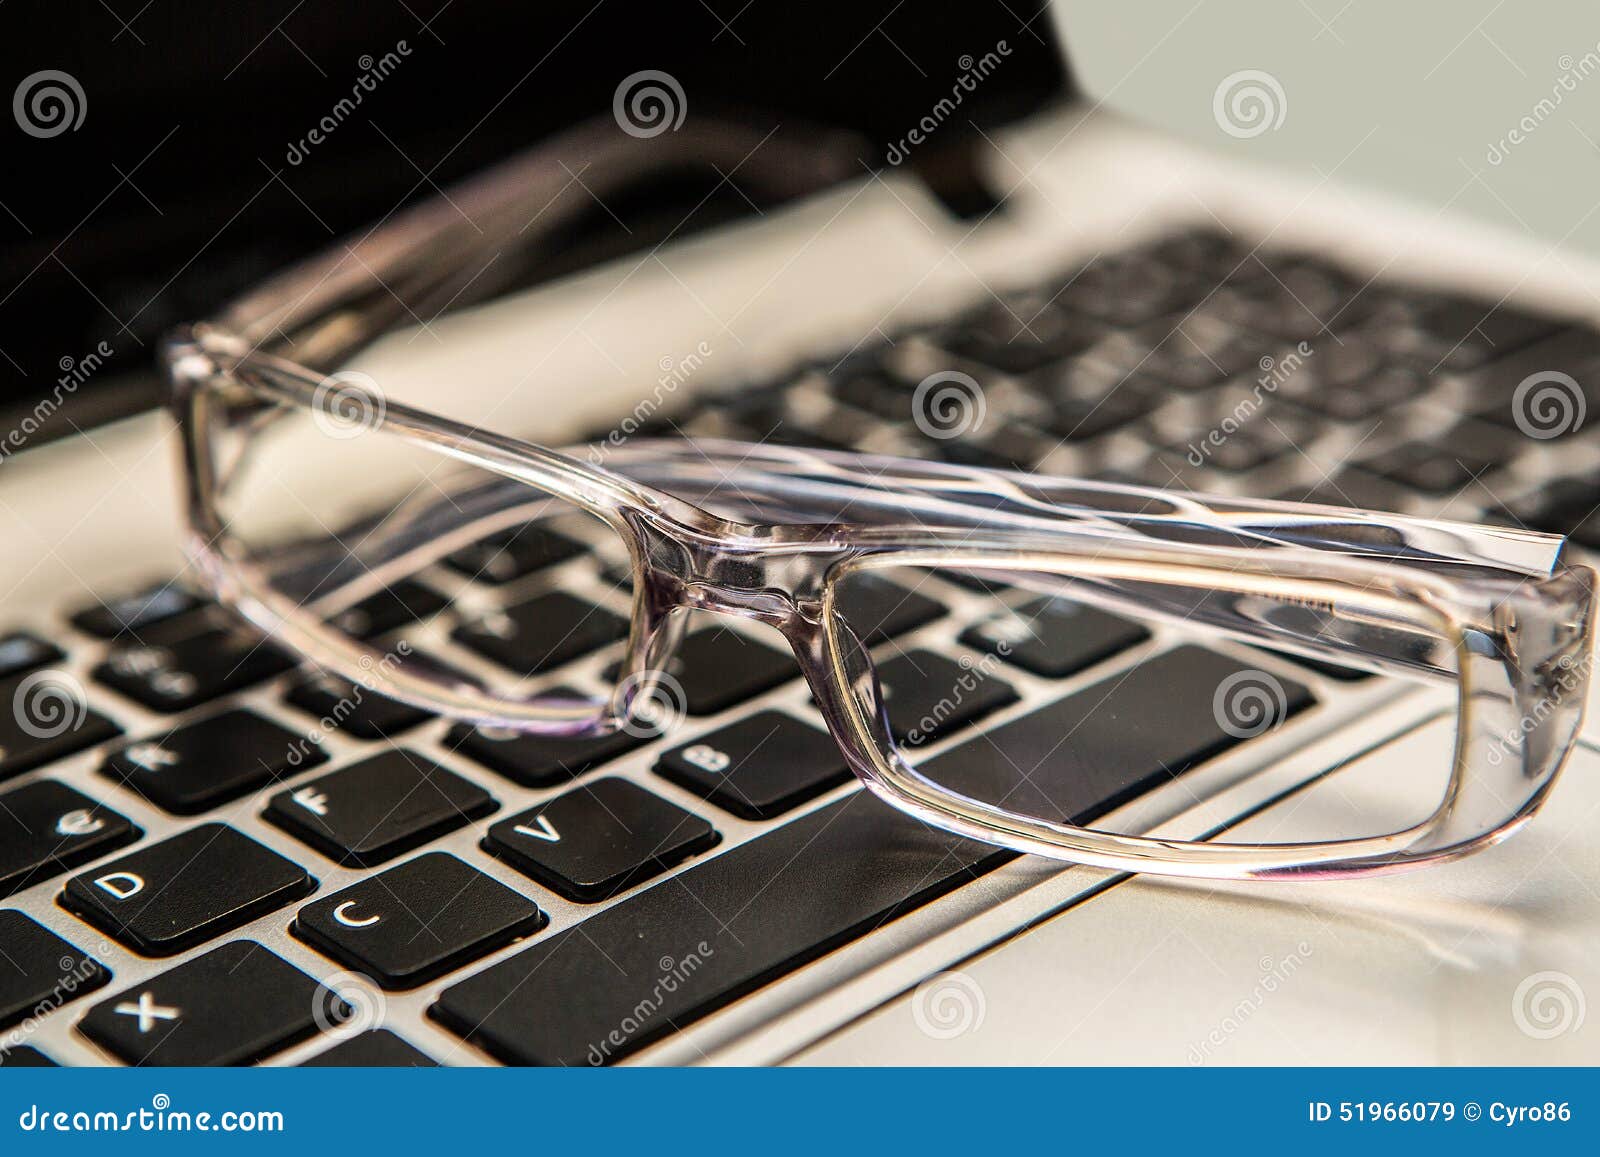 eyeglasses with keyboard